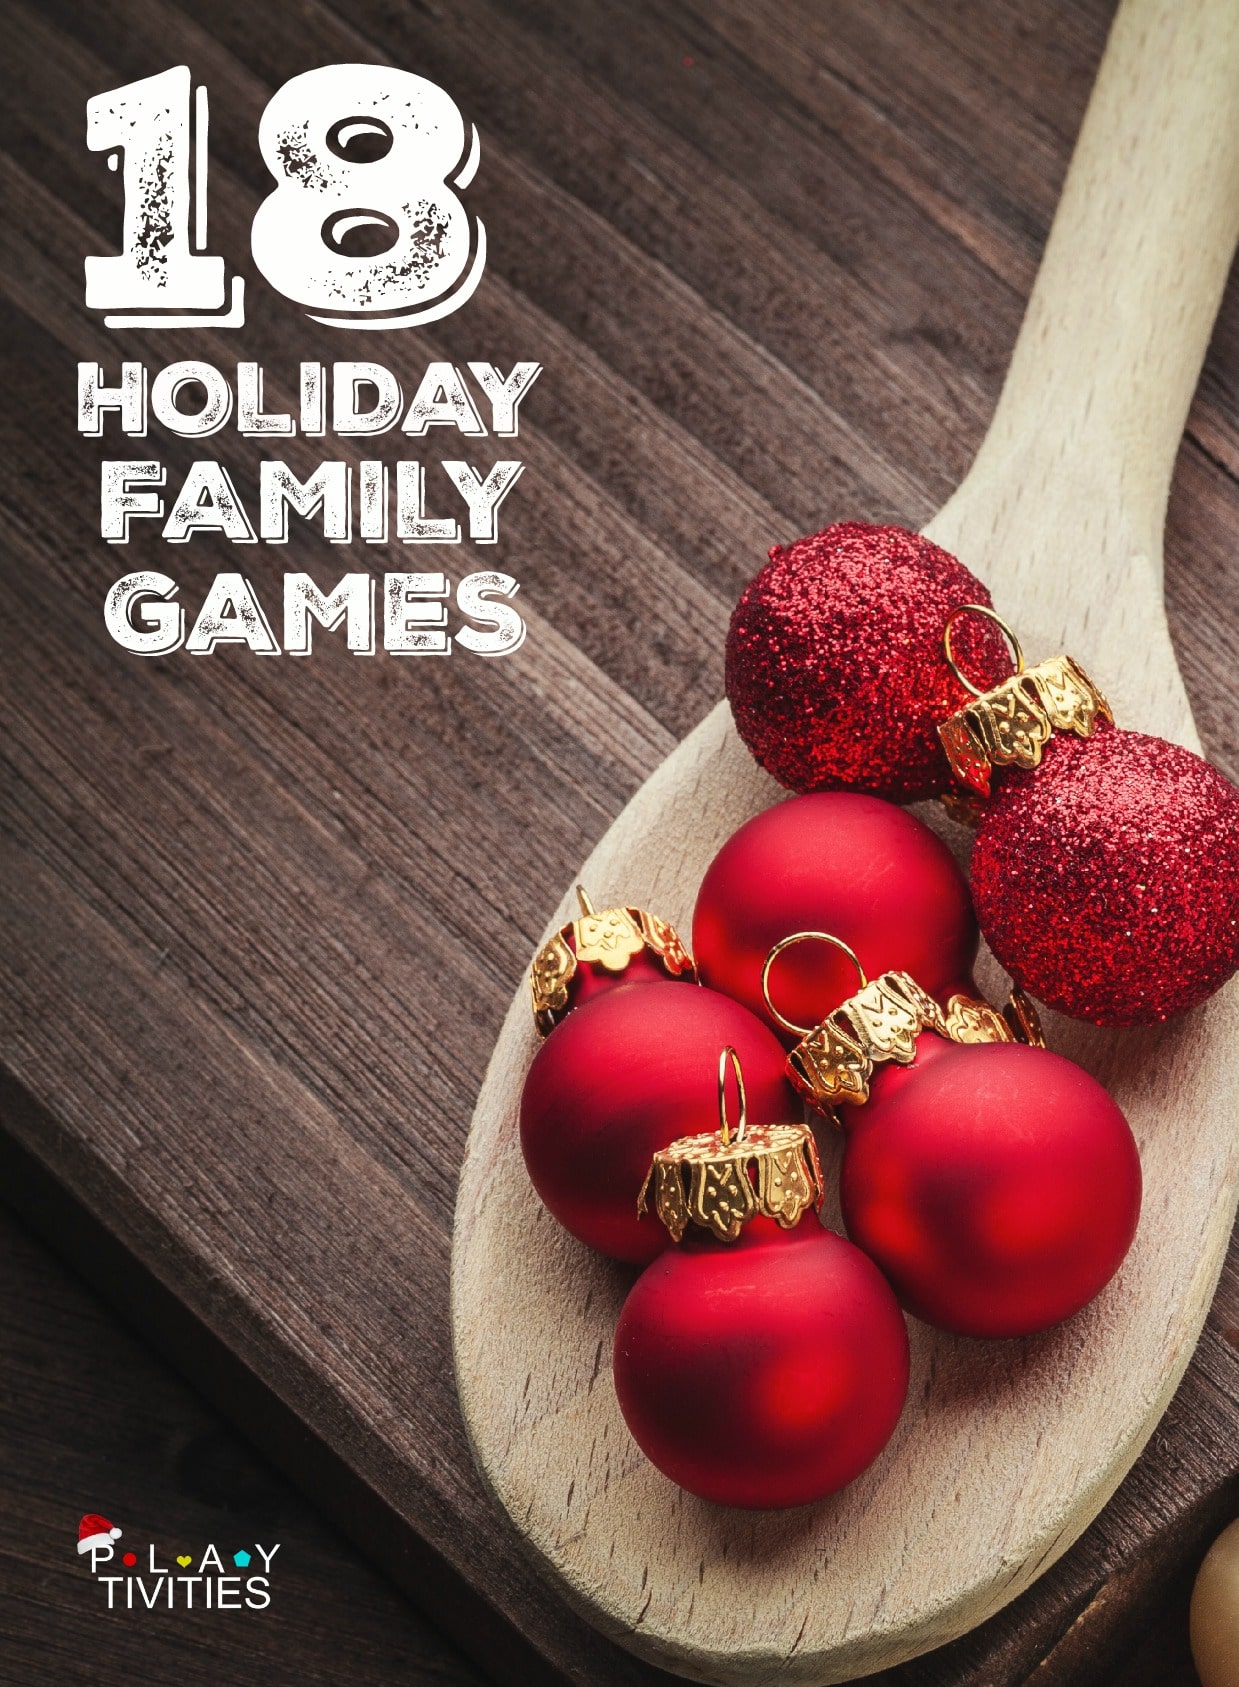 Free Printable Christmas Games To Play With Family - Printable Online